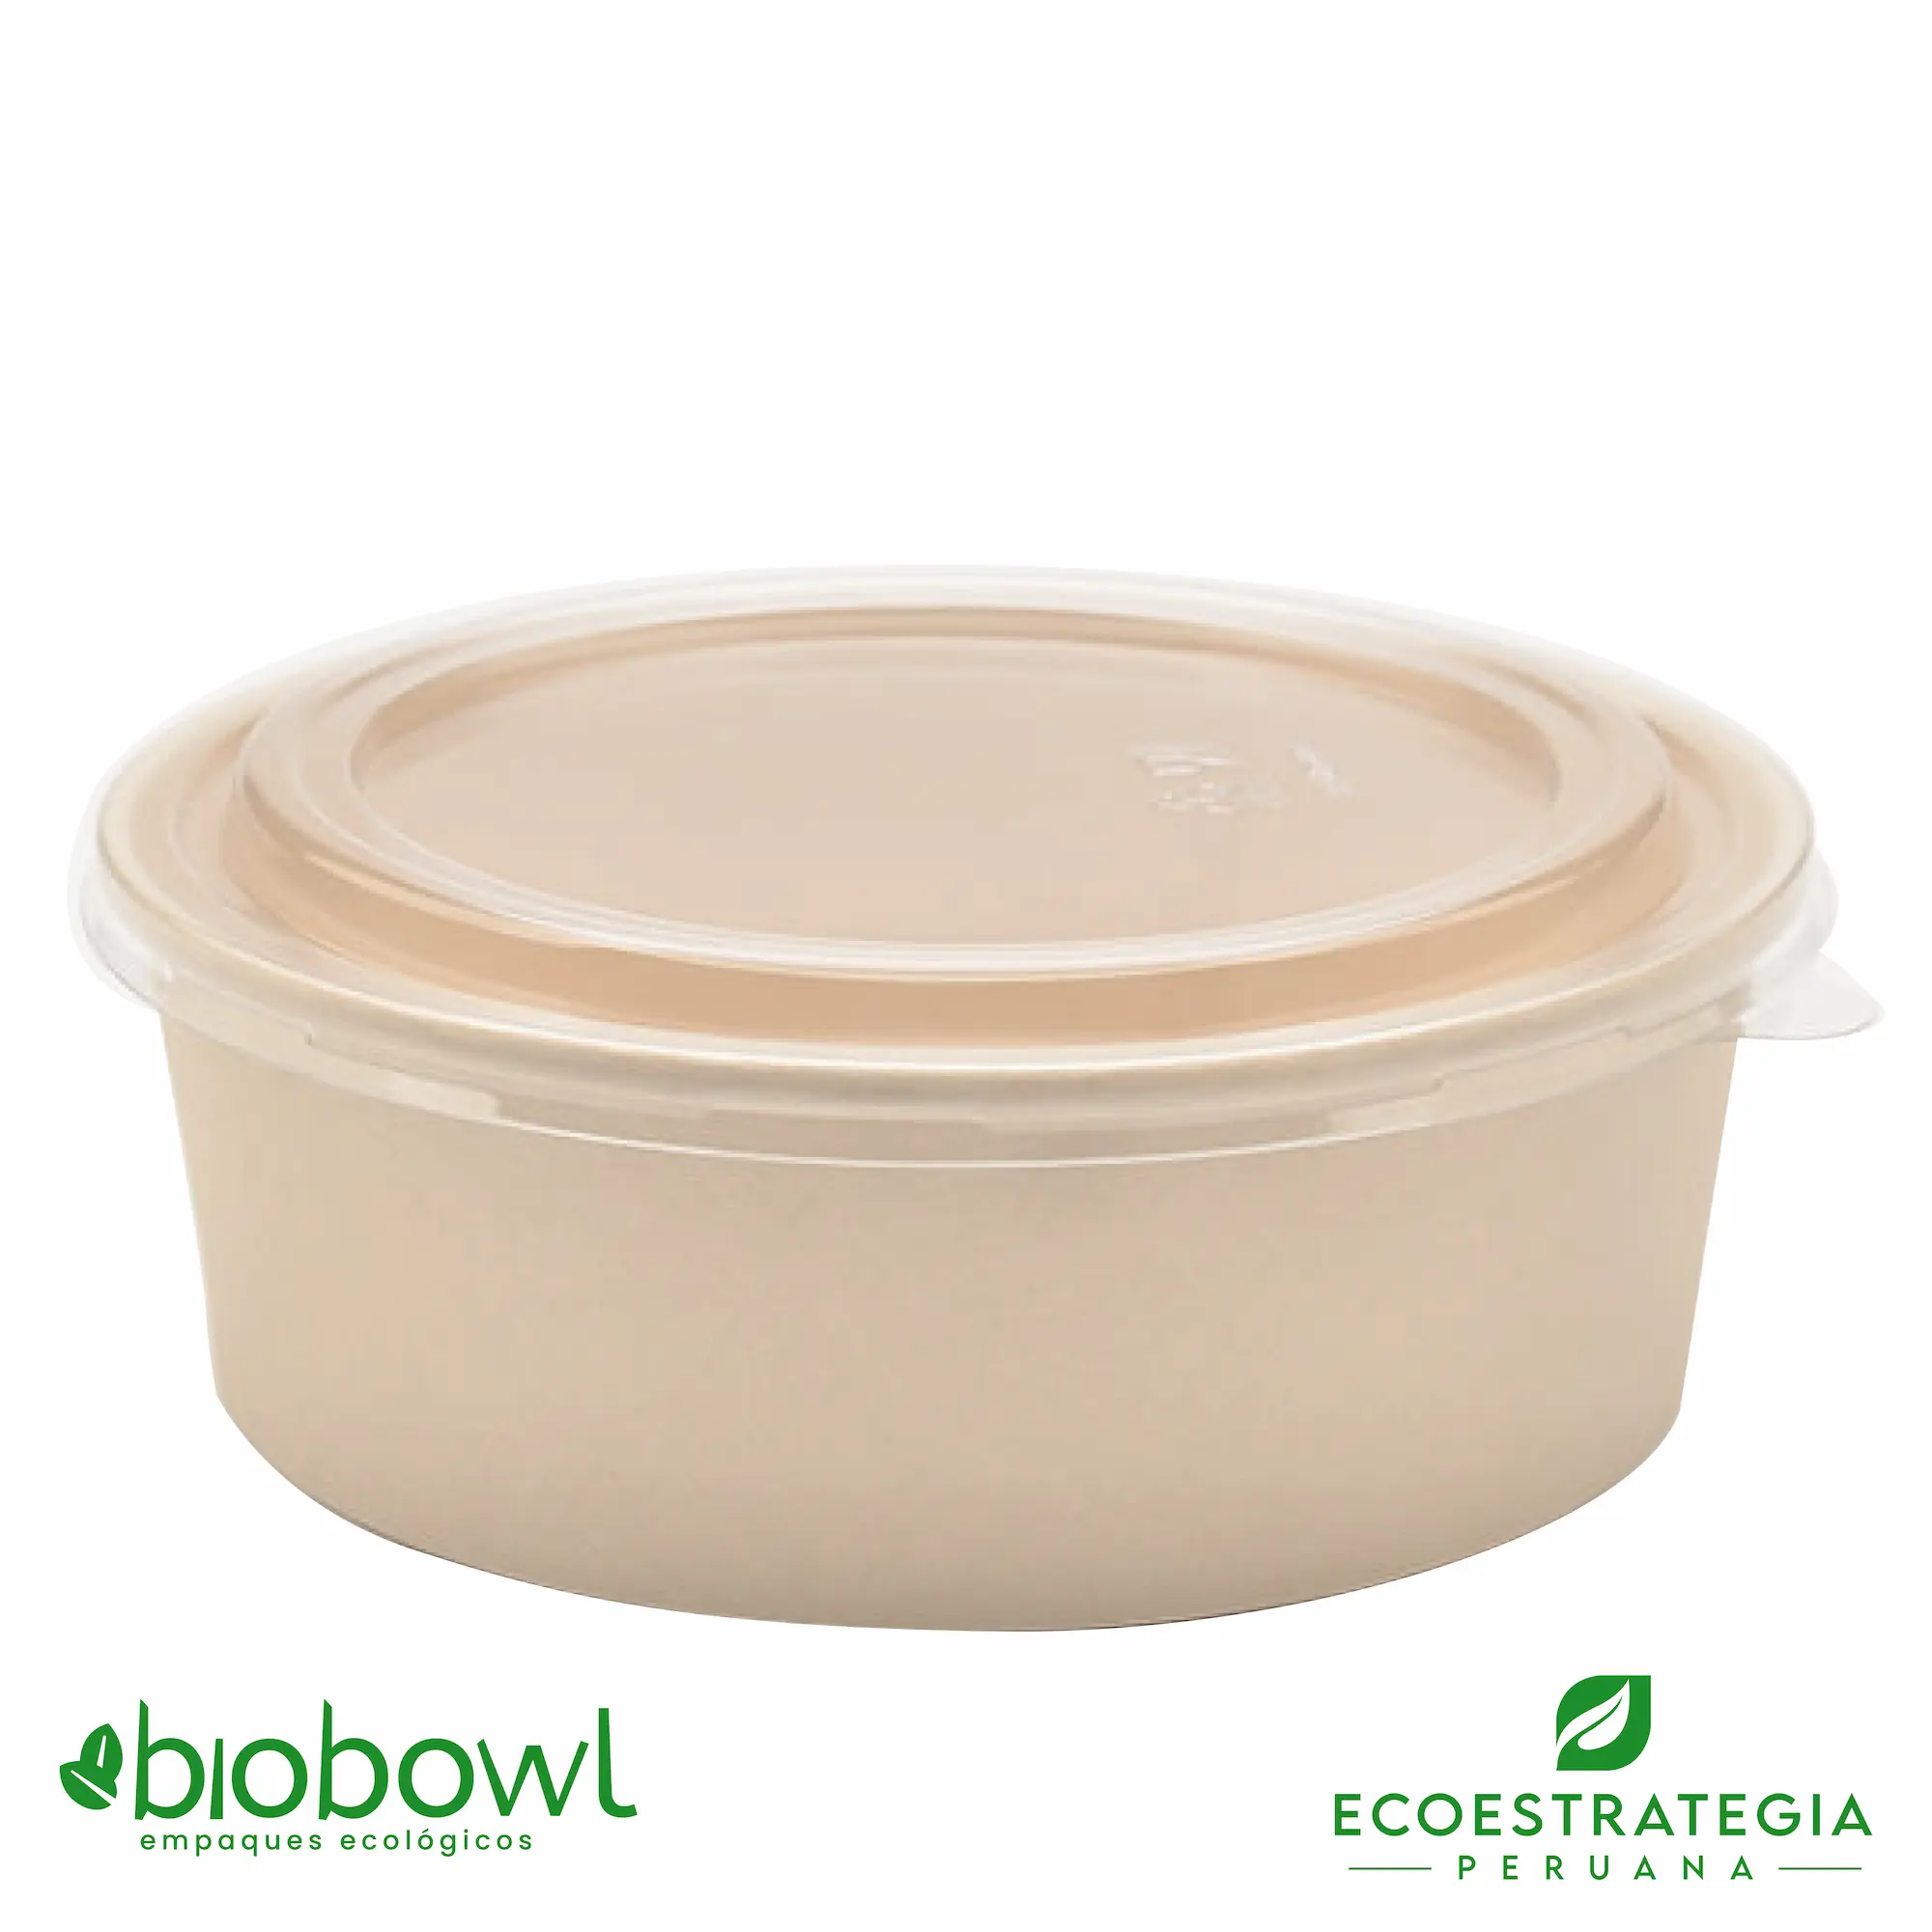 Este bowl biodegradable de 1300 ml es a base de fibra de bambu. Envases descartables con gramaje ideal, cotiza tus empaques, platos y tapers para alimentos